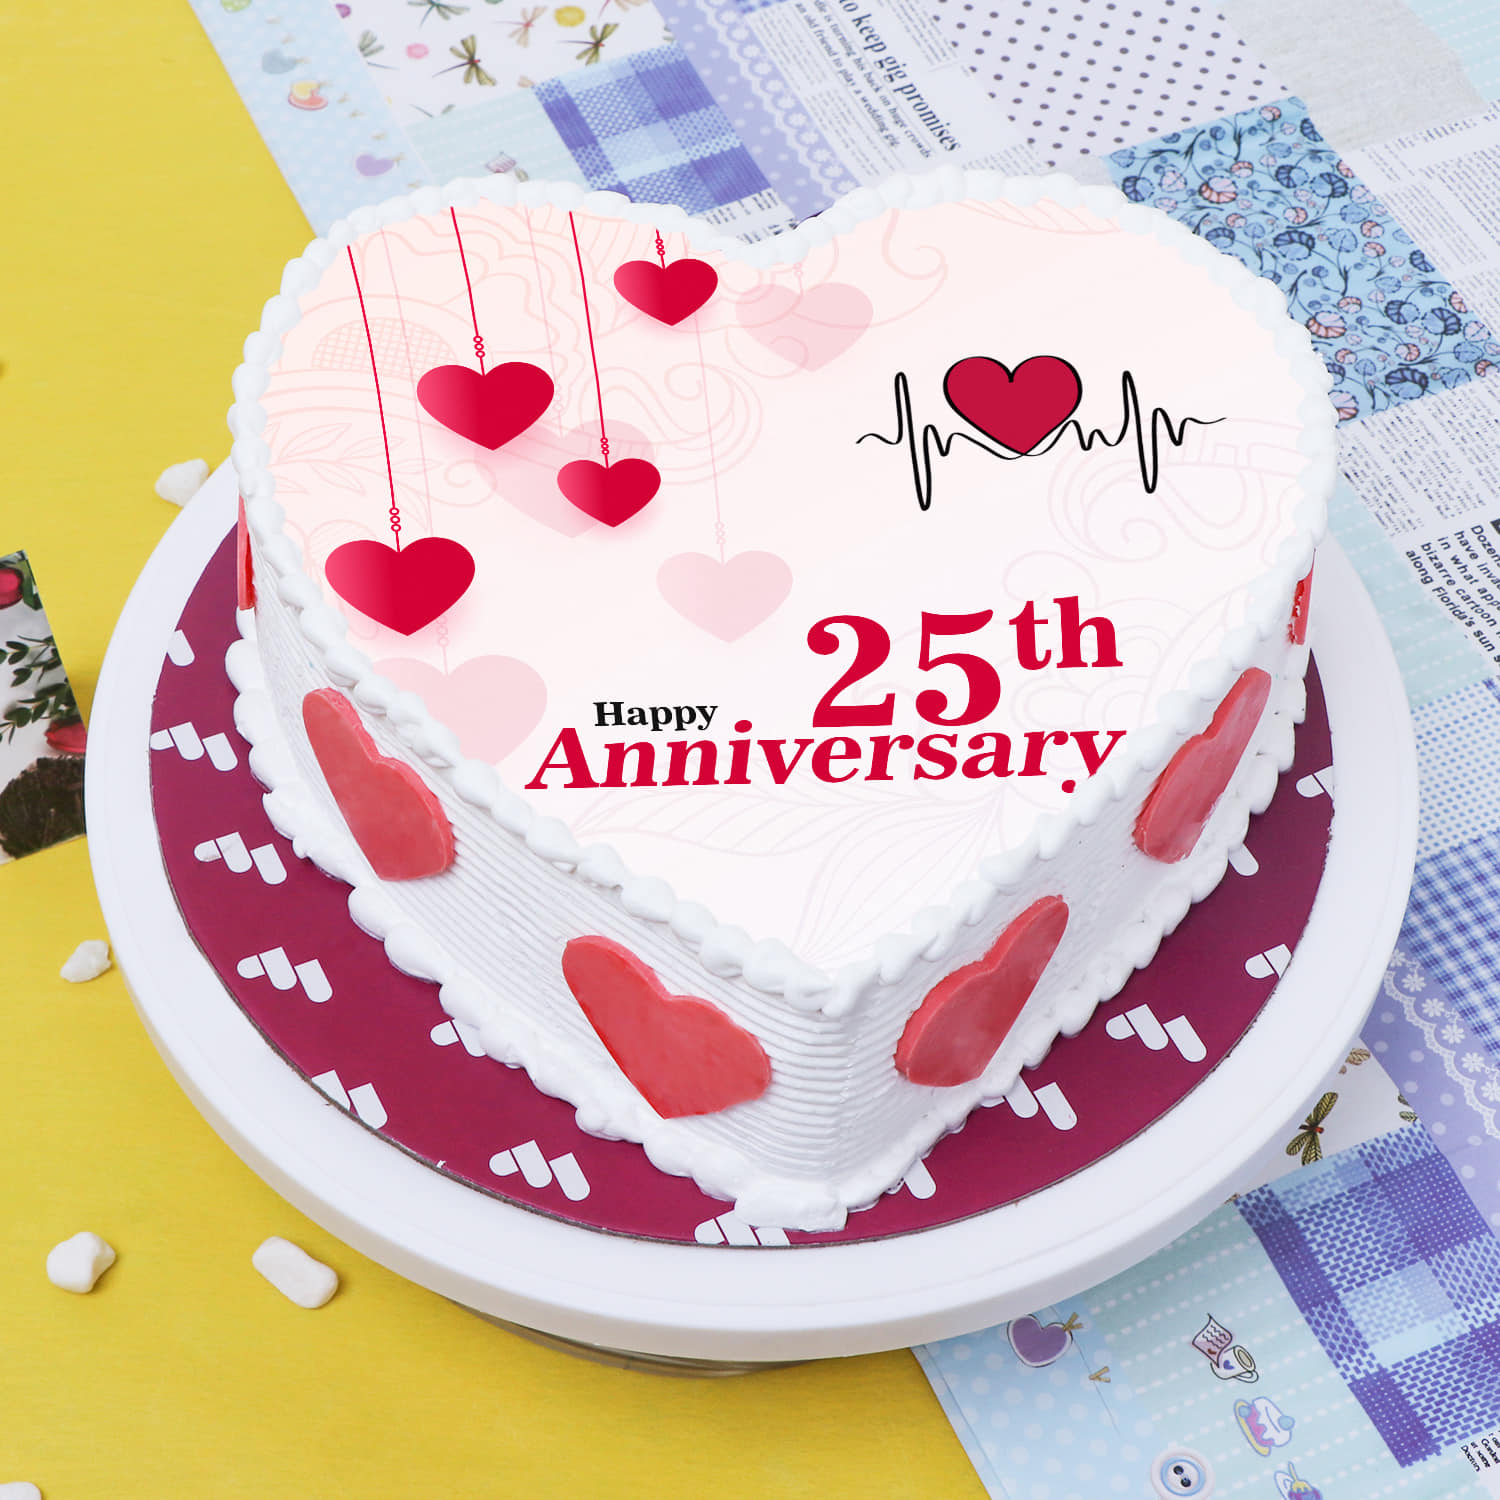 Buy/Send Silver Jubilee Anniversary Cake Online - 25th Anniversary Cake